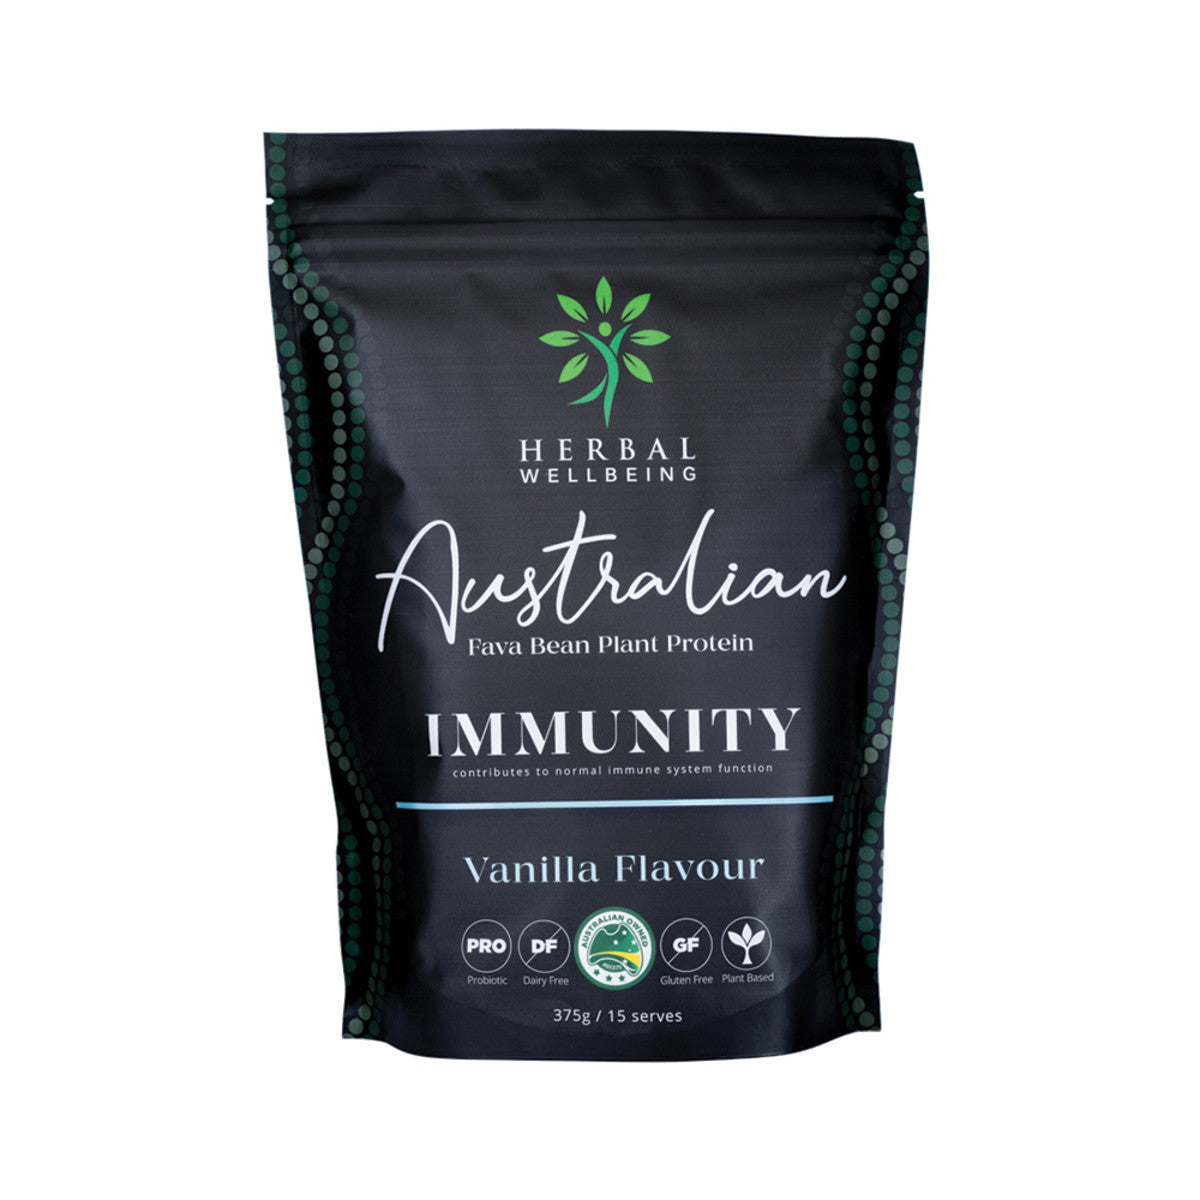 Herbal Wellbeing Australian Fava Bean Plant Protein Immunity Vanilla 375g